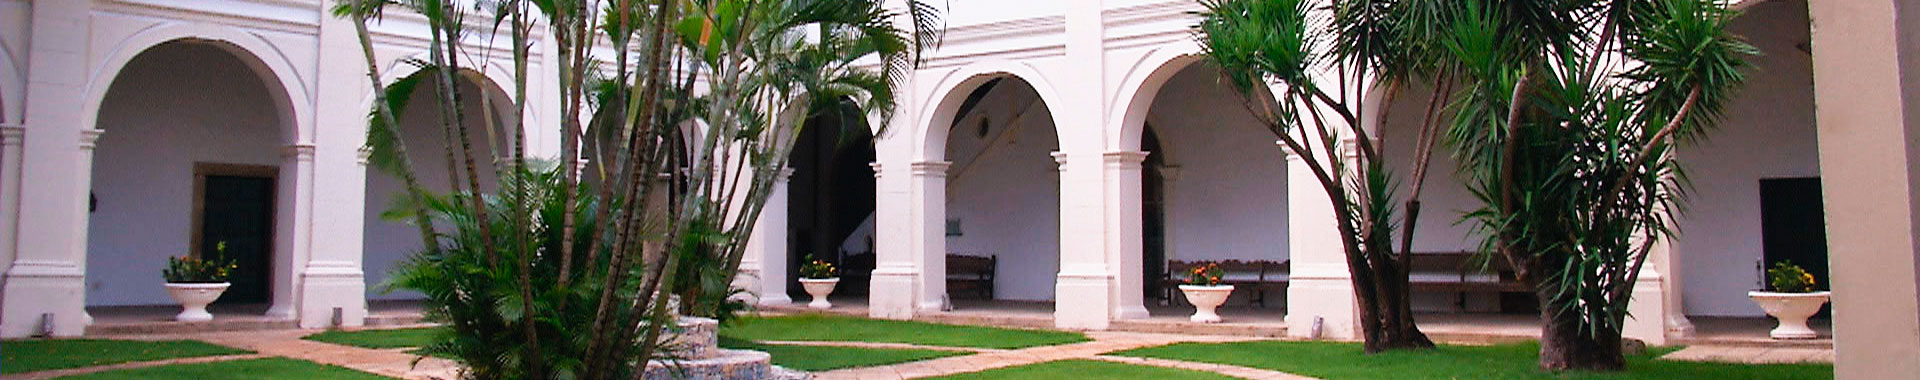 Brasil - Salvador Bahia - Hoteles - Convento